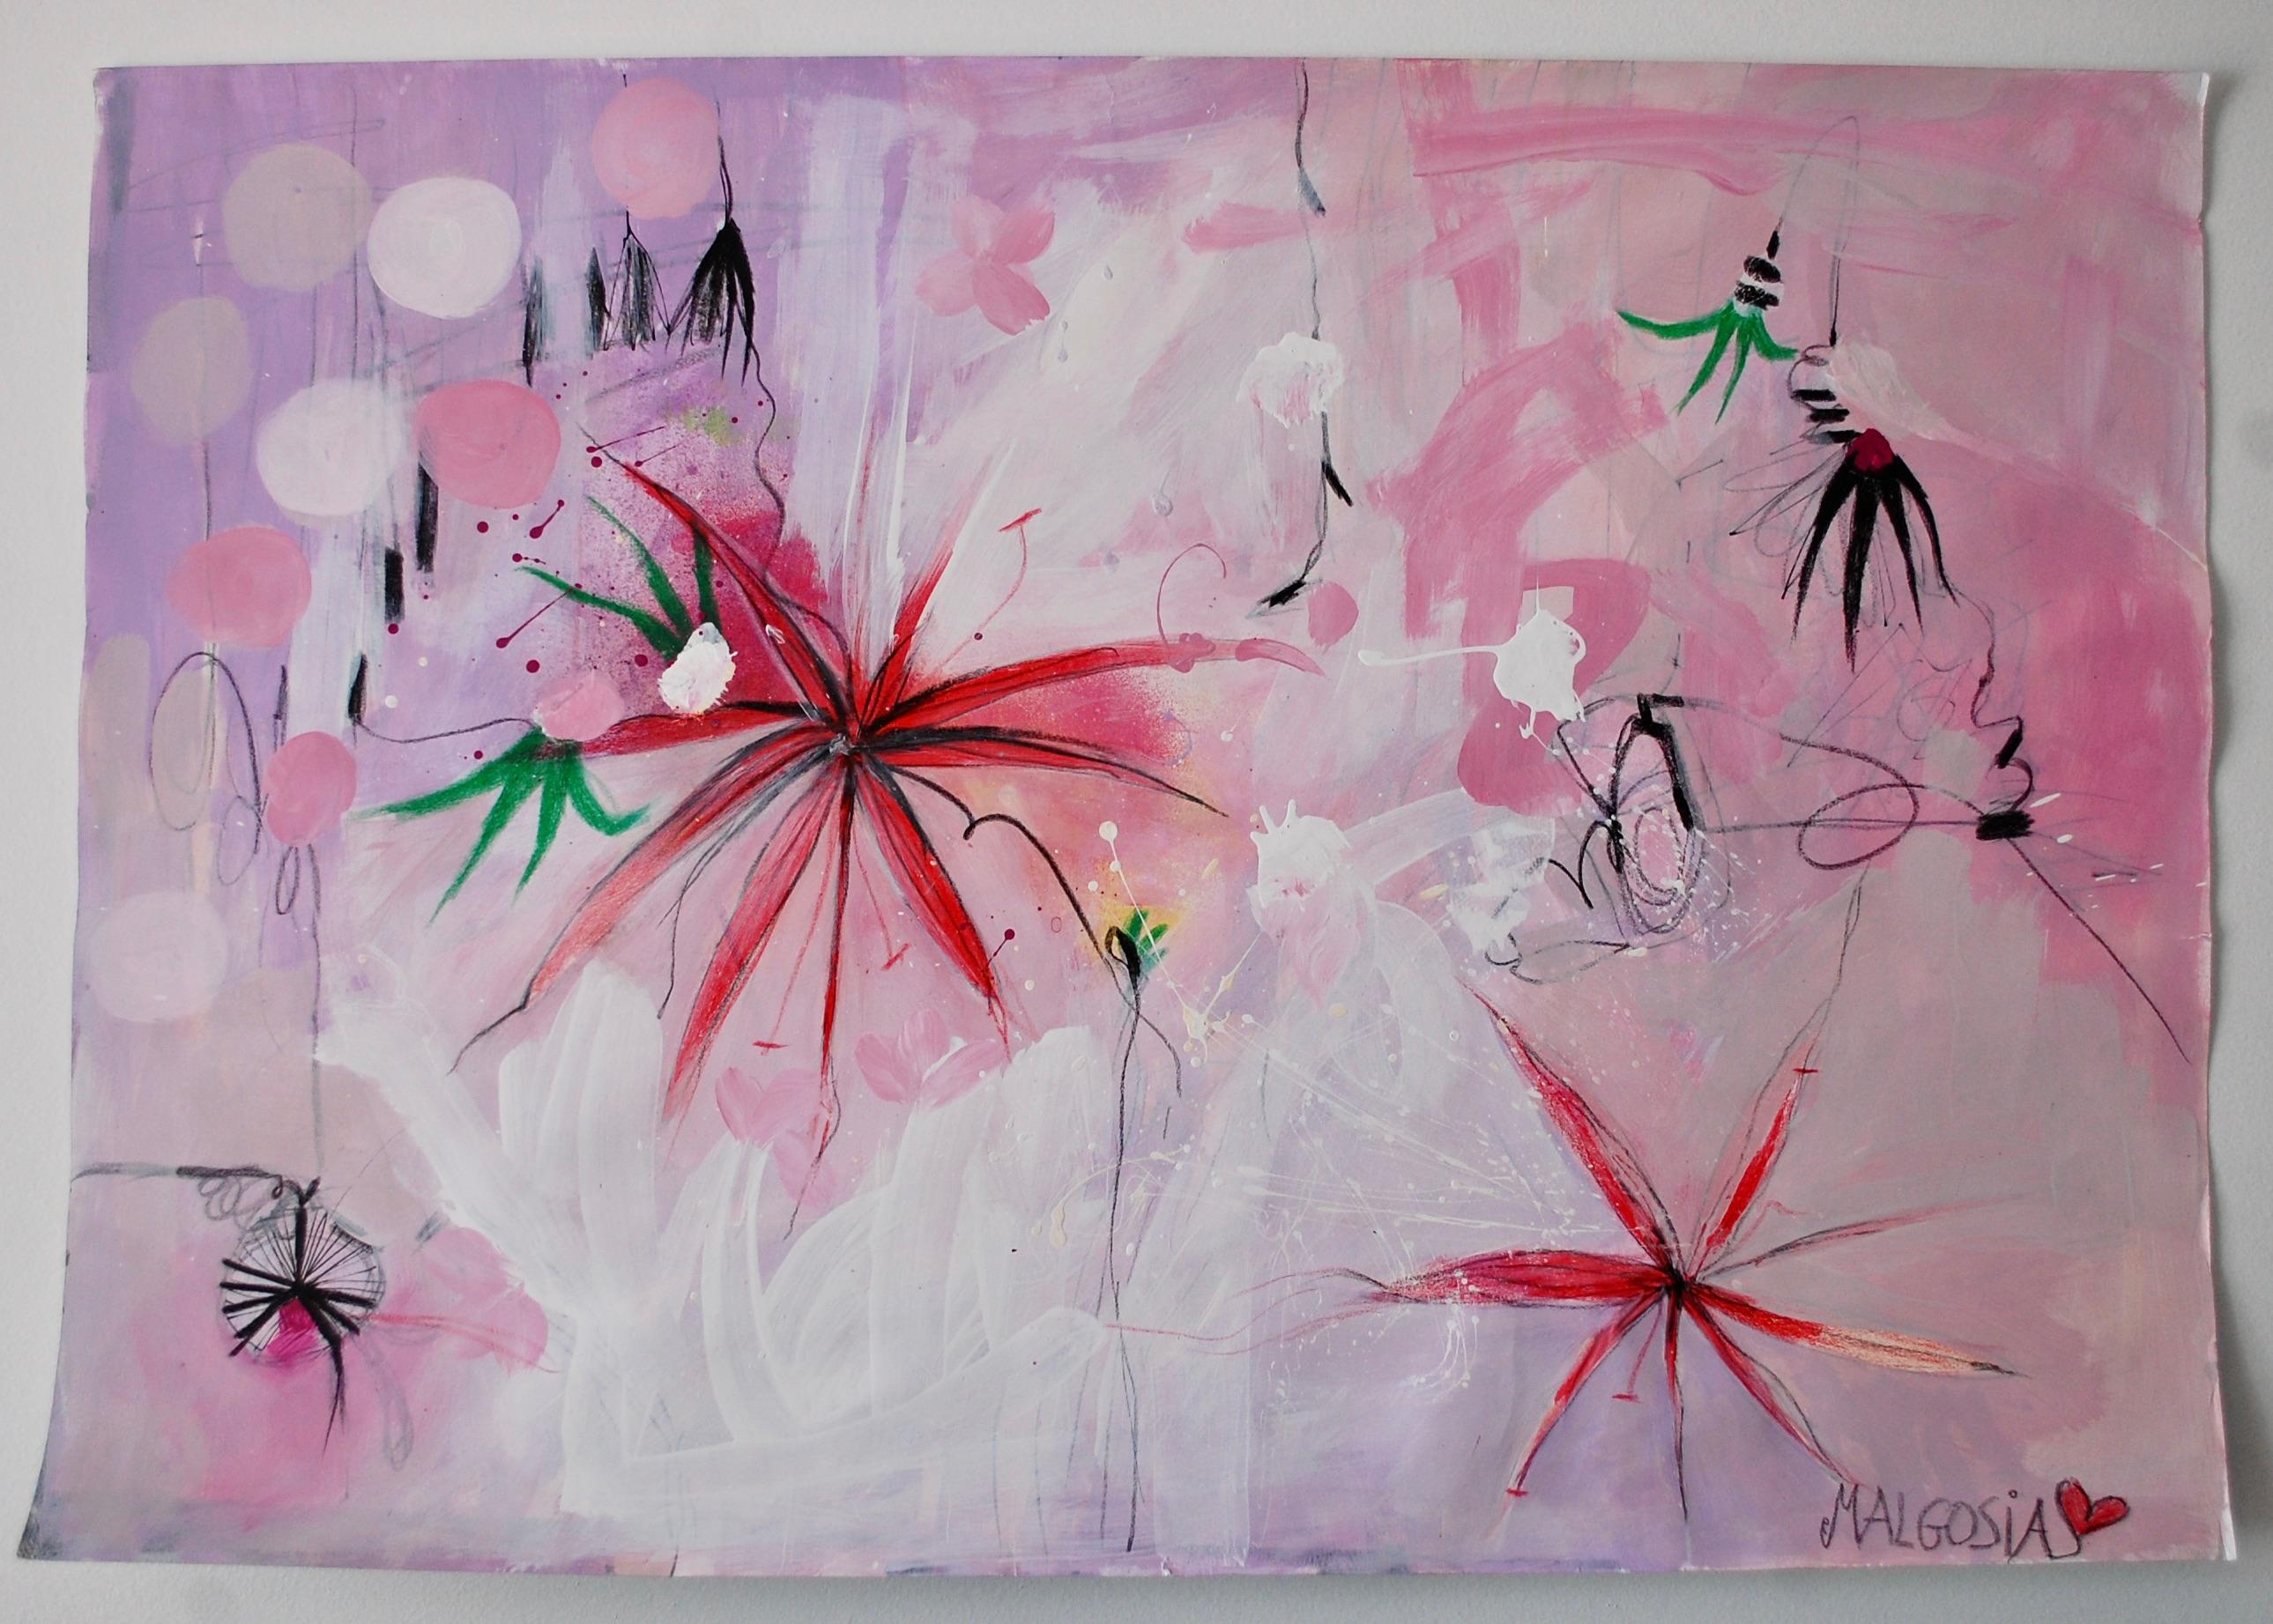 Malgosia Kiernozycka Abstract Painting – Lili Ozean Teil II